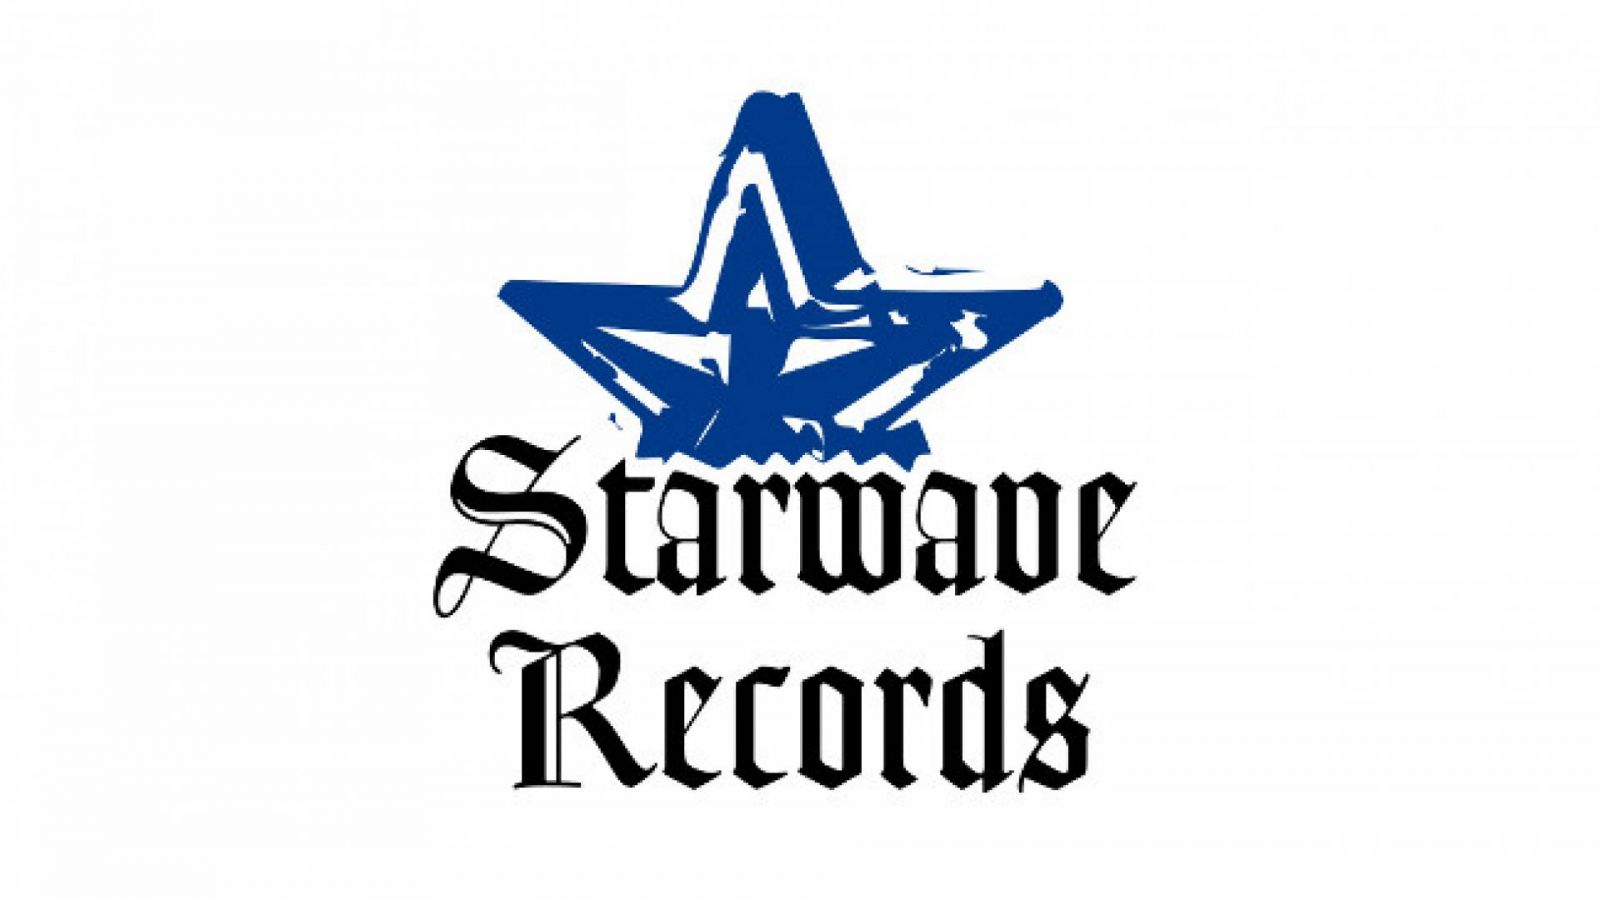 Congratulations from Tokami and Misaruka © Starwave Records